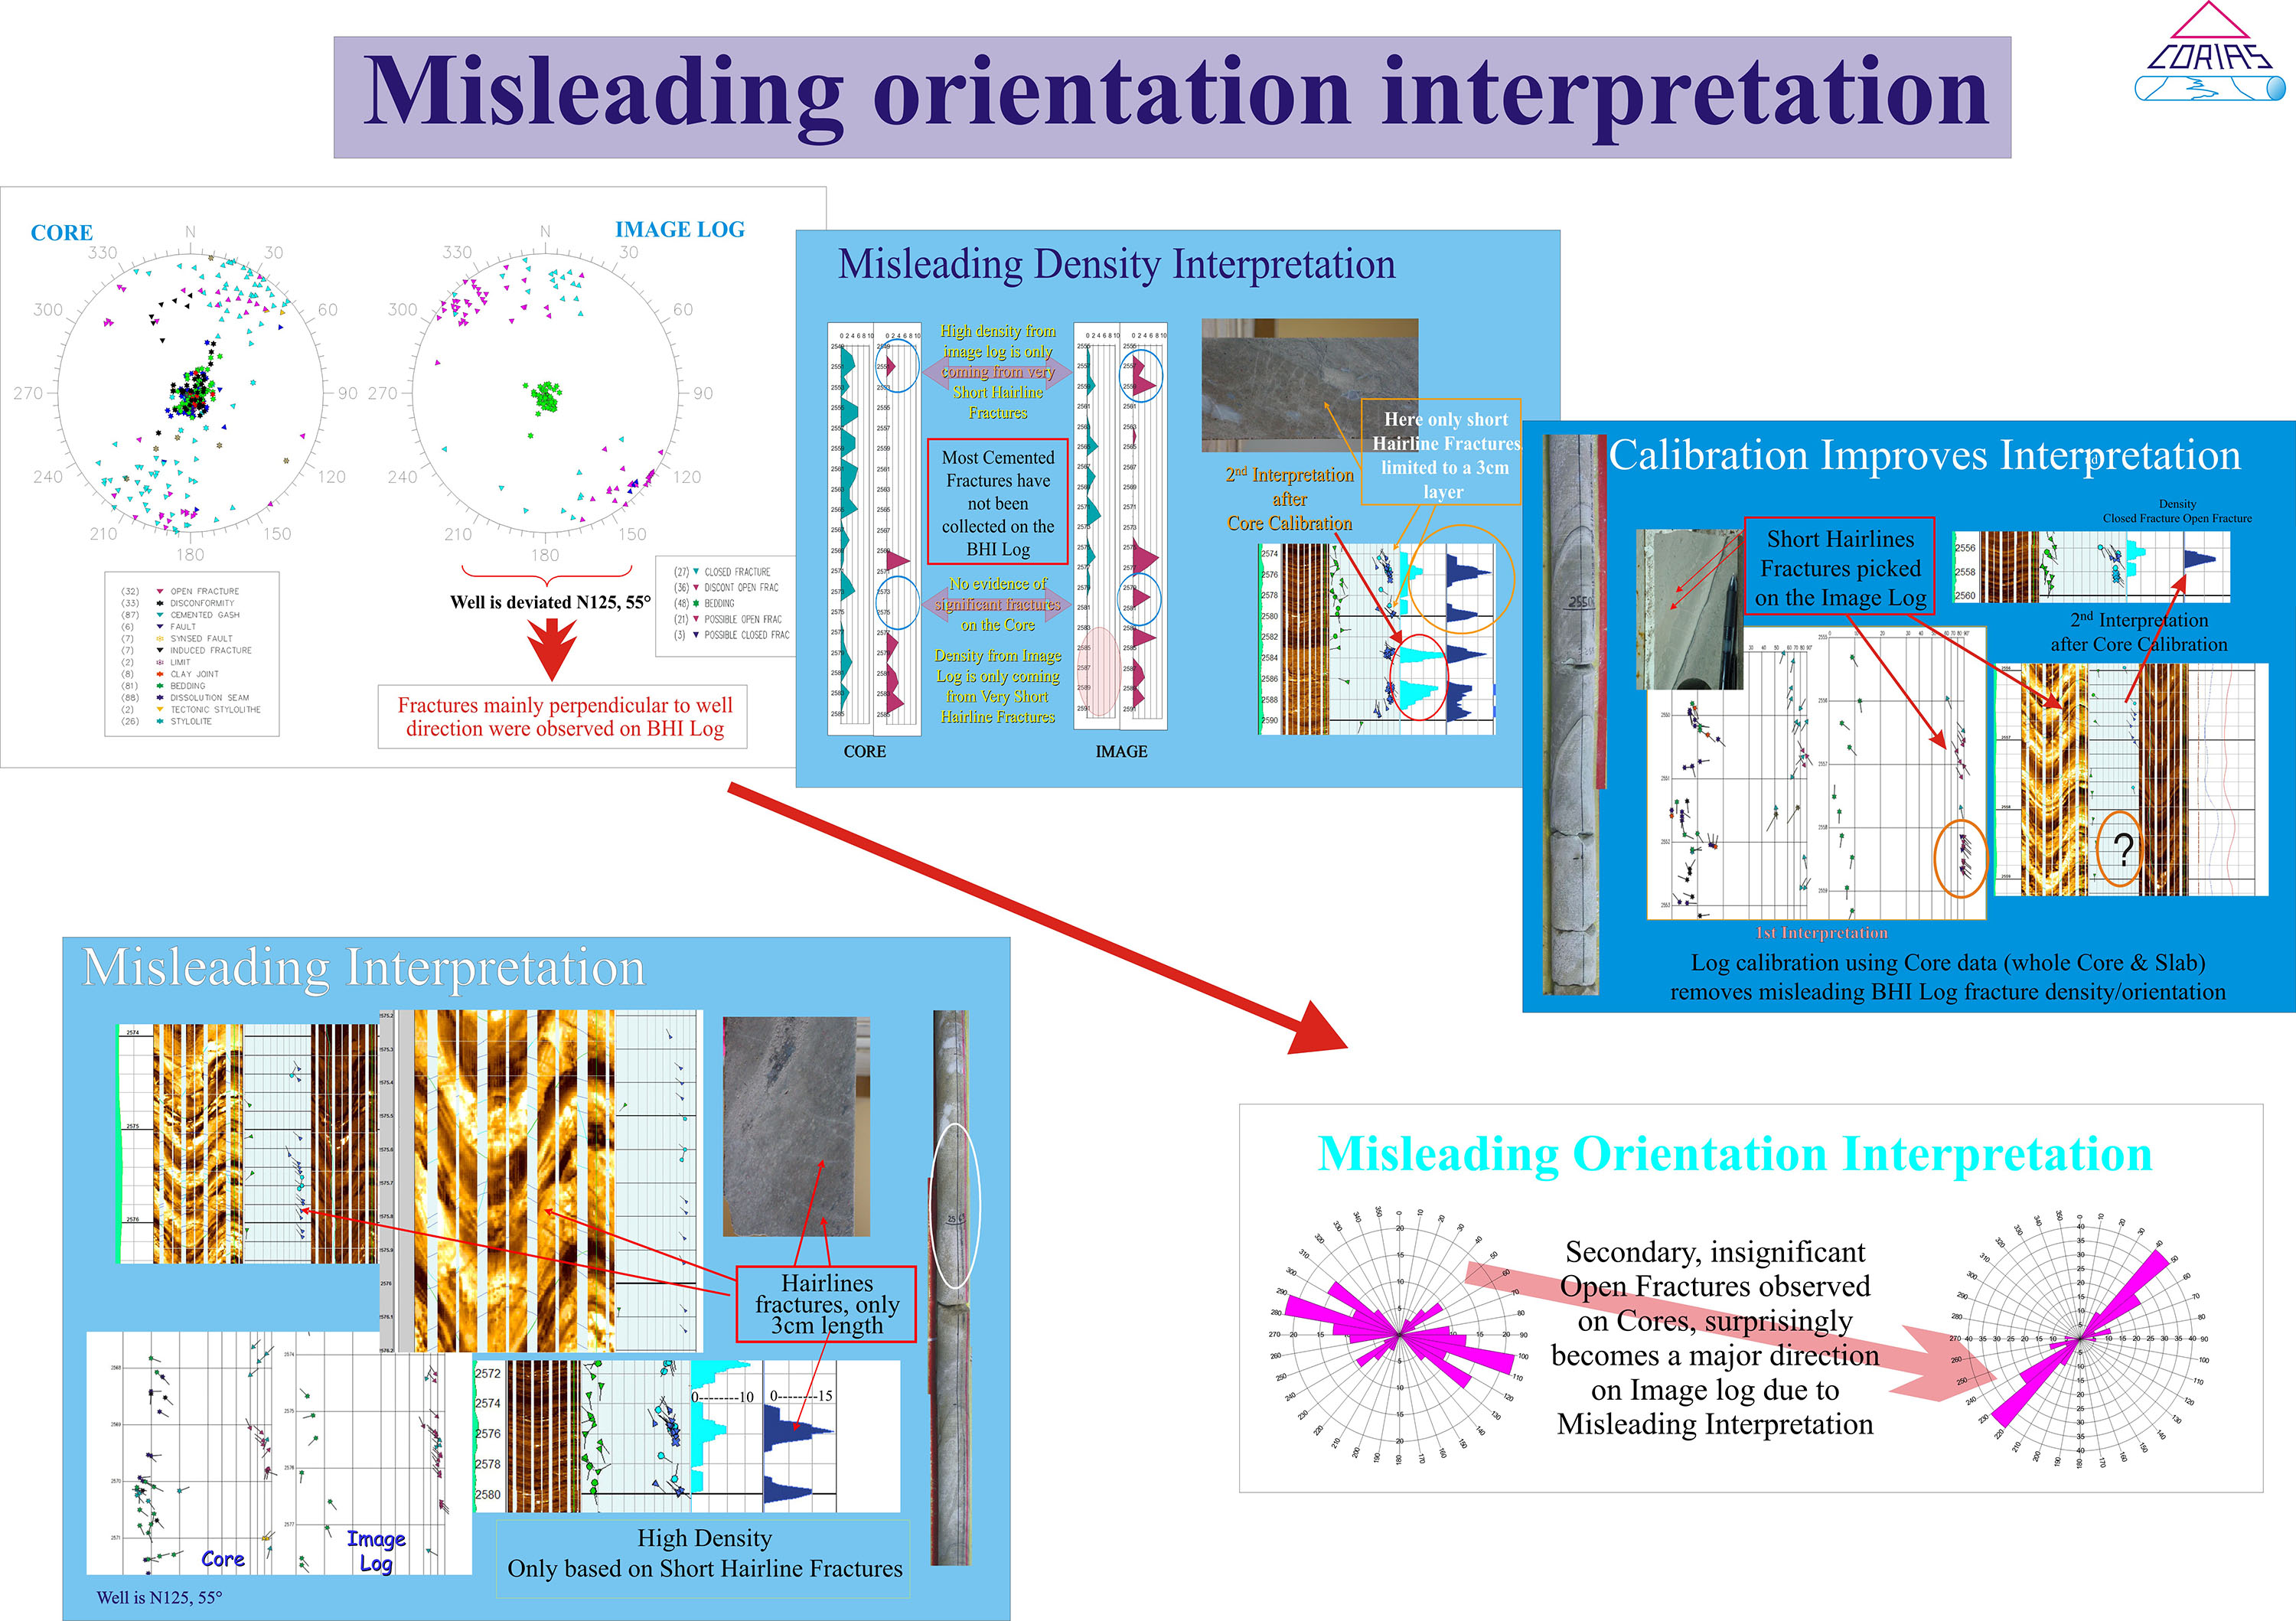 Corias Misleading image log orientation interpretation